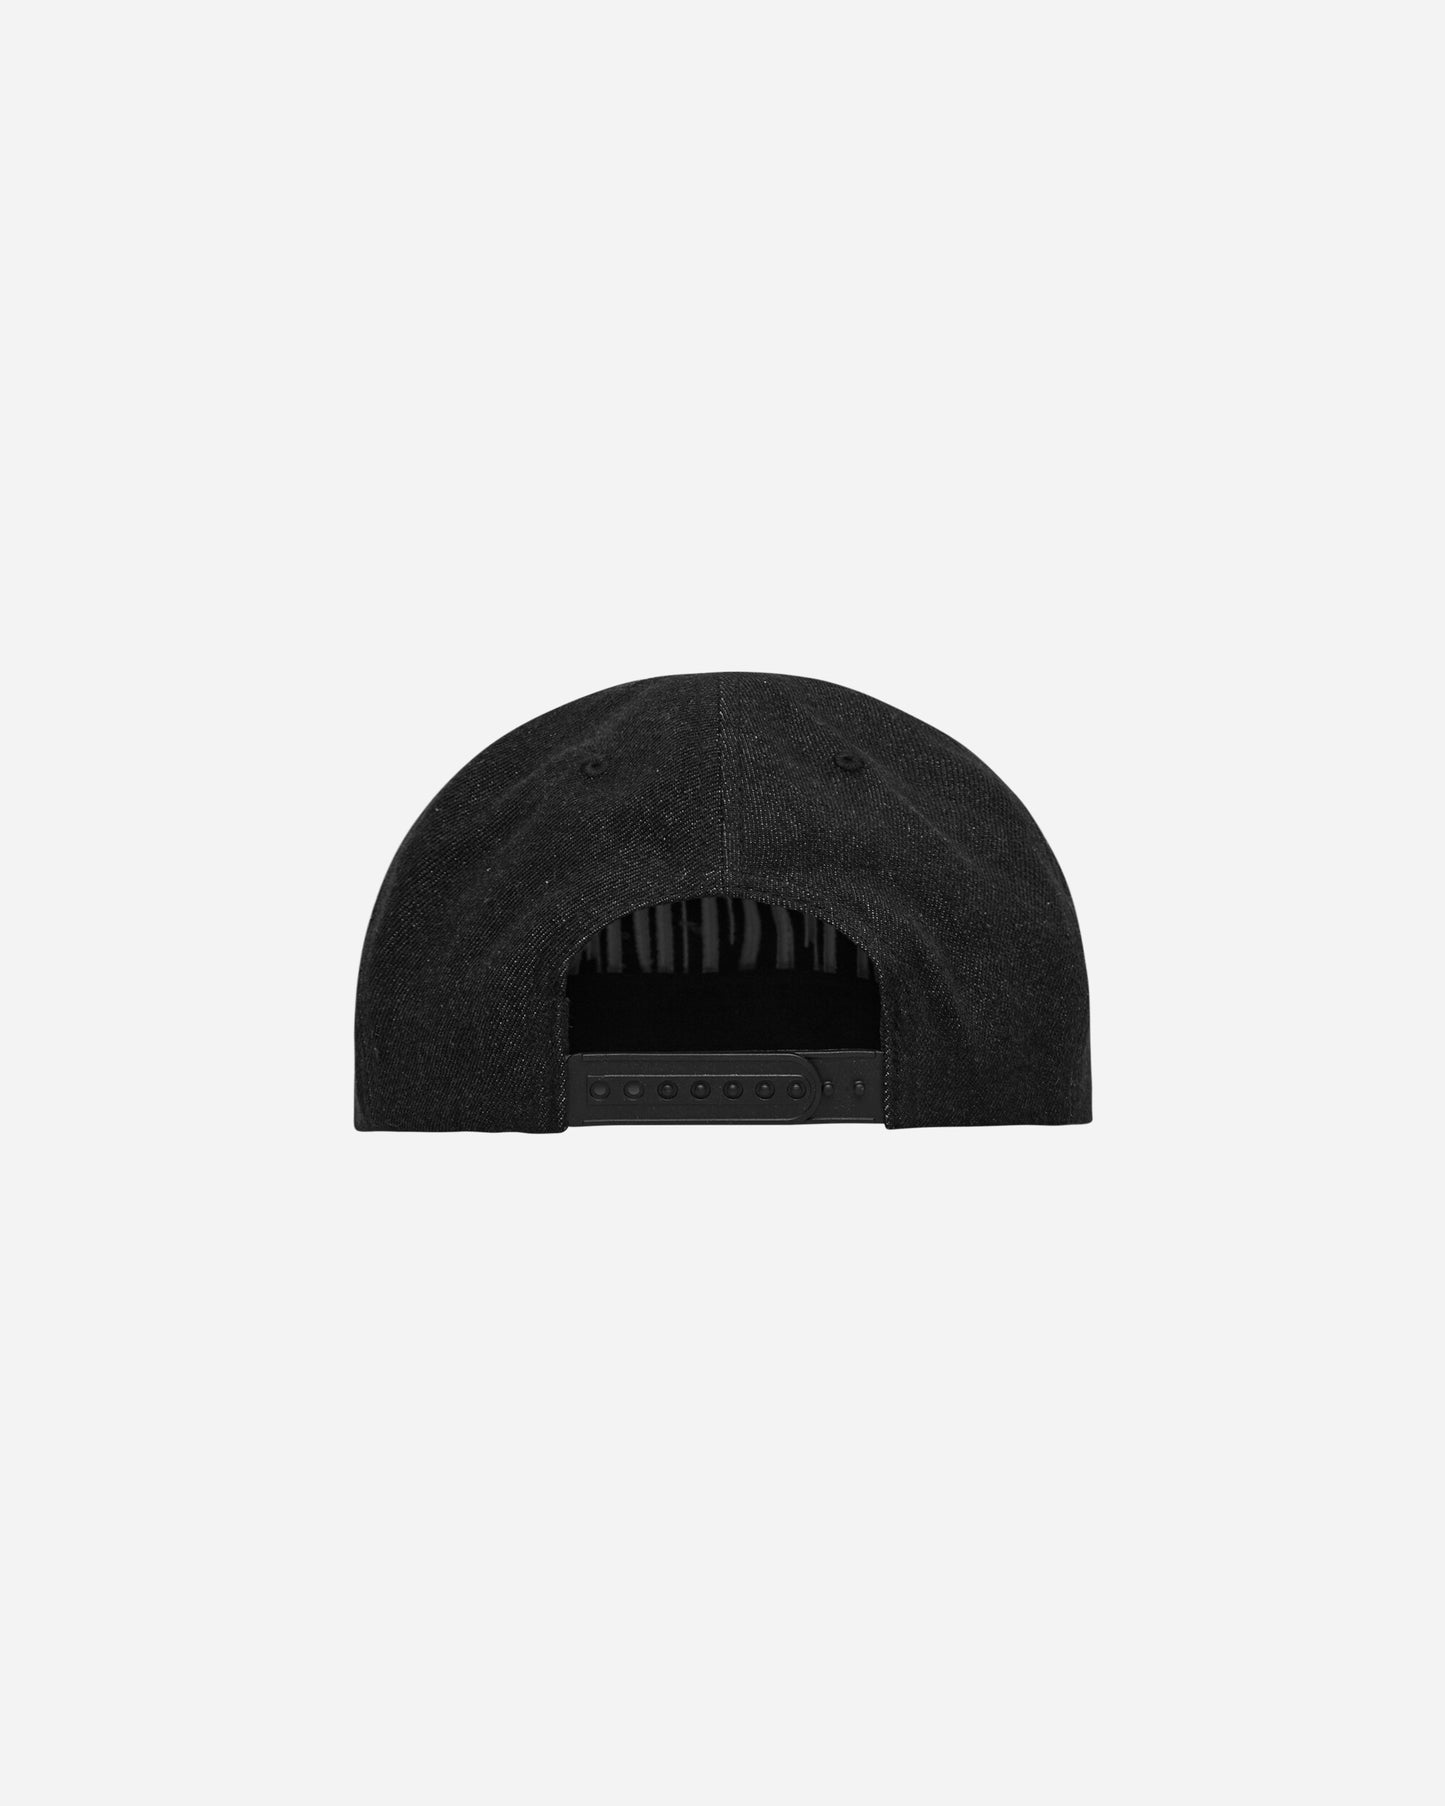 Pleasures Stretch Snapback Black Hats Caps P23SP069 BLACK